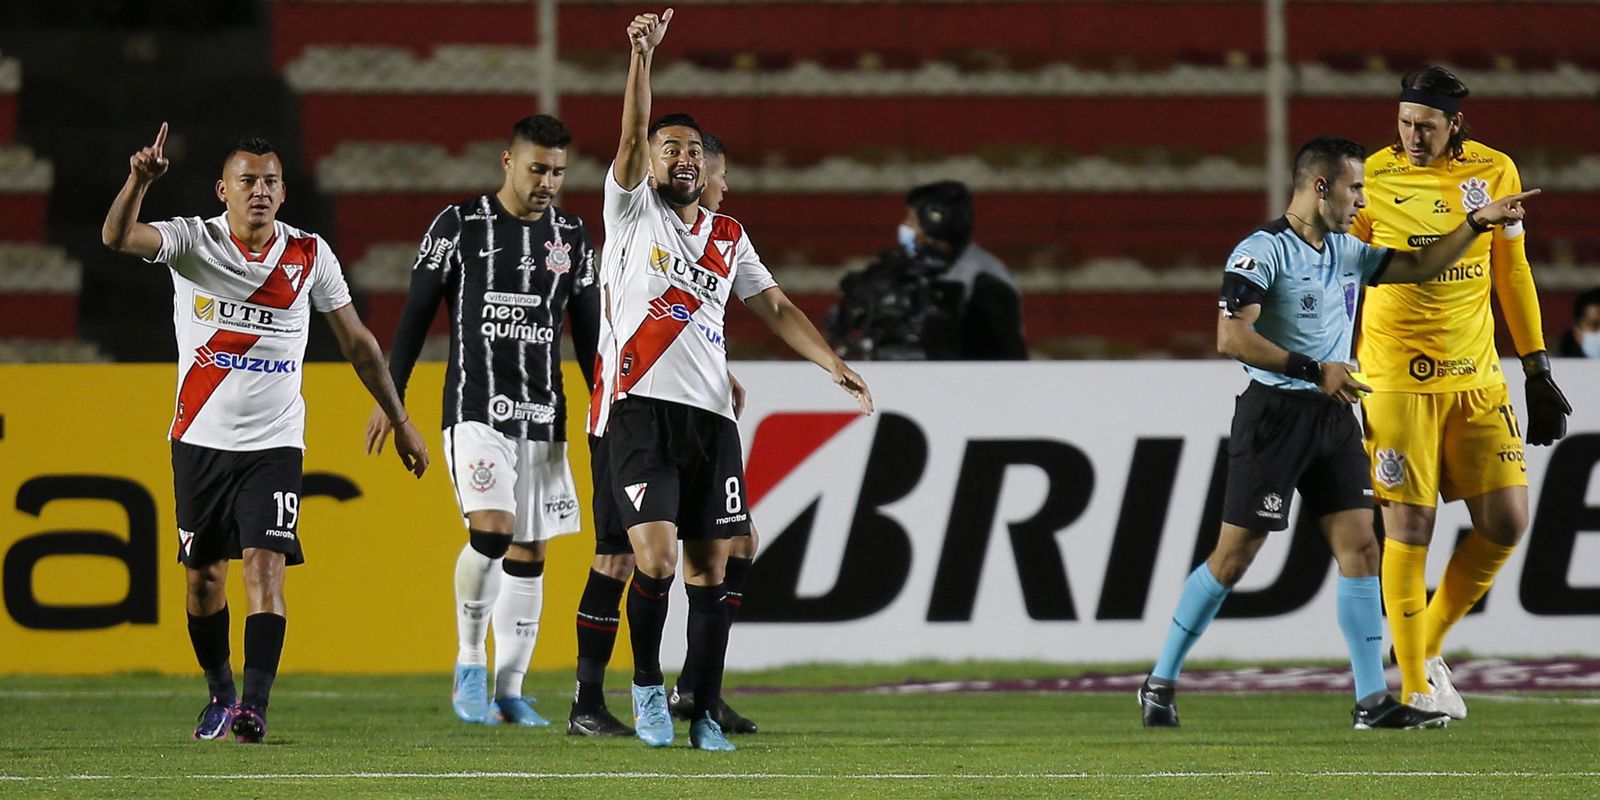 At the altitude of La Paz, Corinthians loses in the Libertadores debut